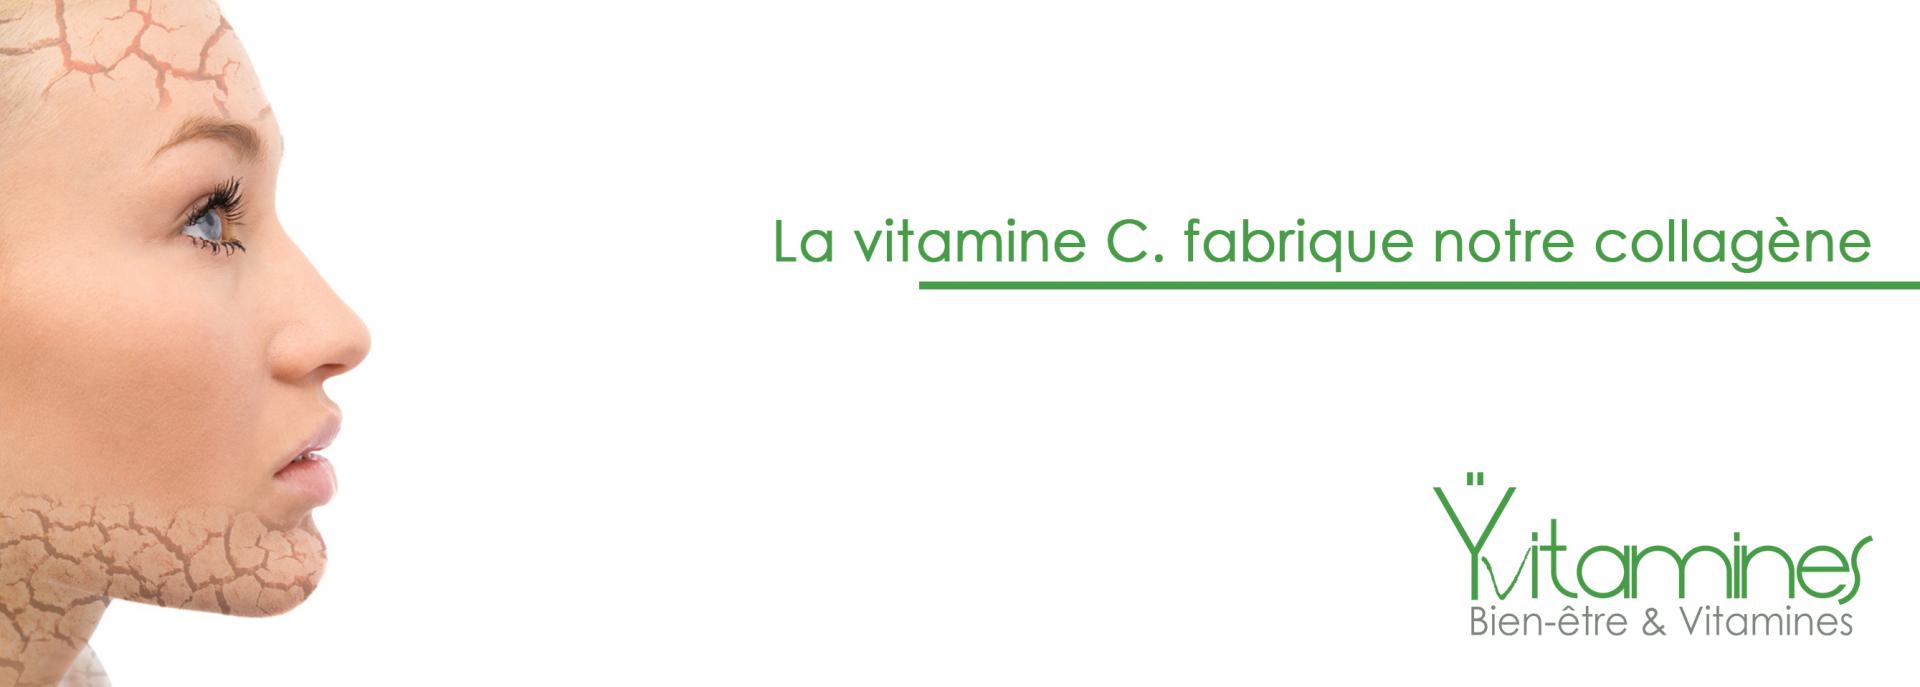 Le secret de la vitamine c collagene